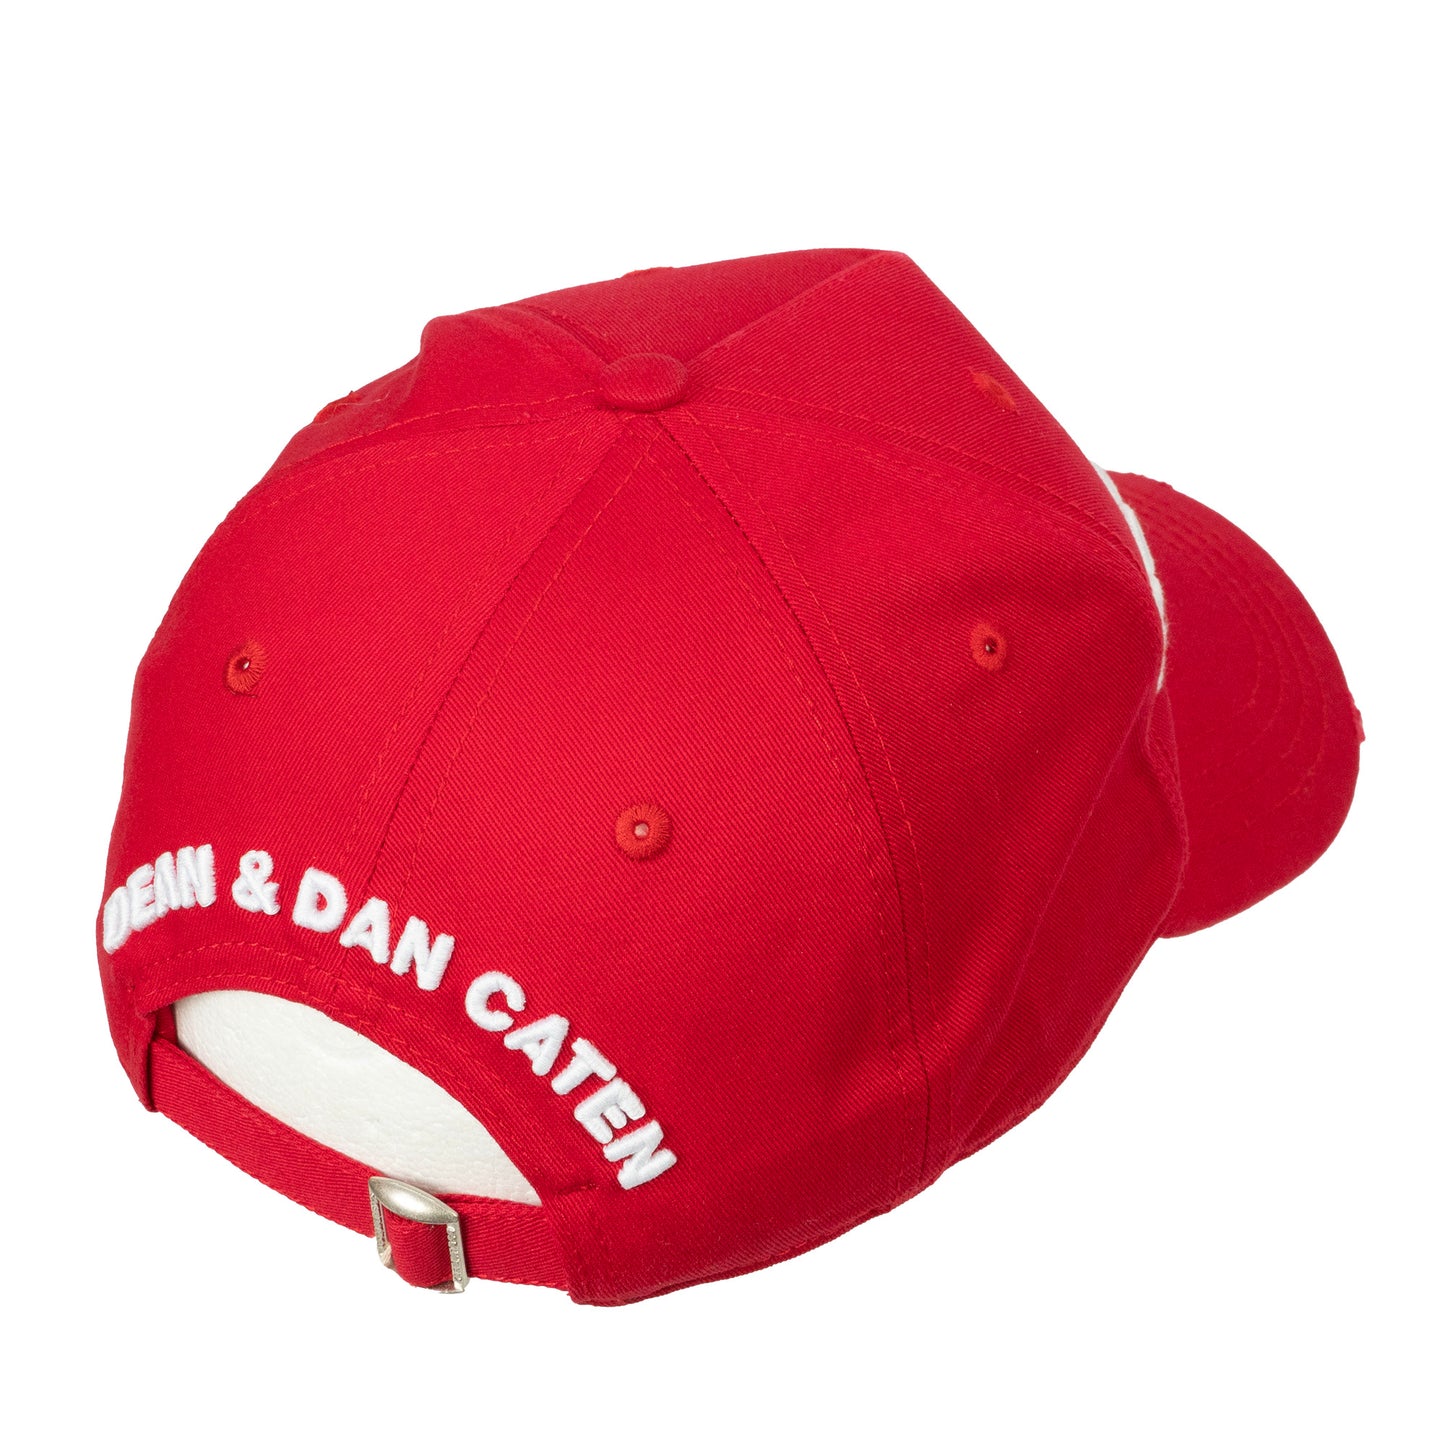 Dsquared2 Baseball Cap, Rot